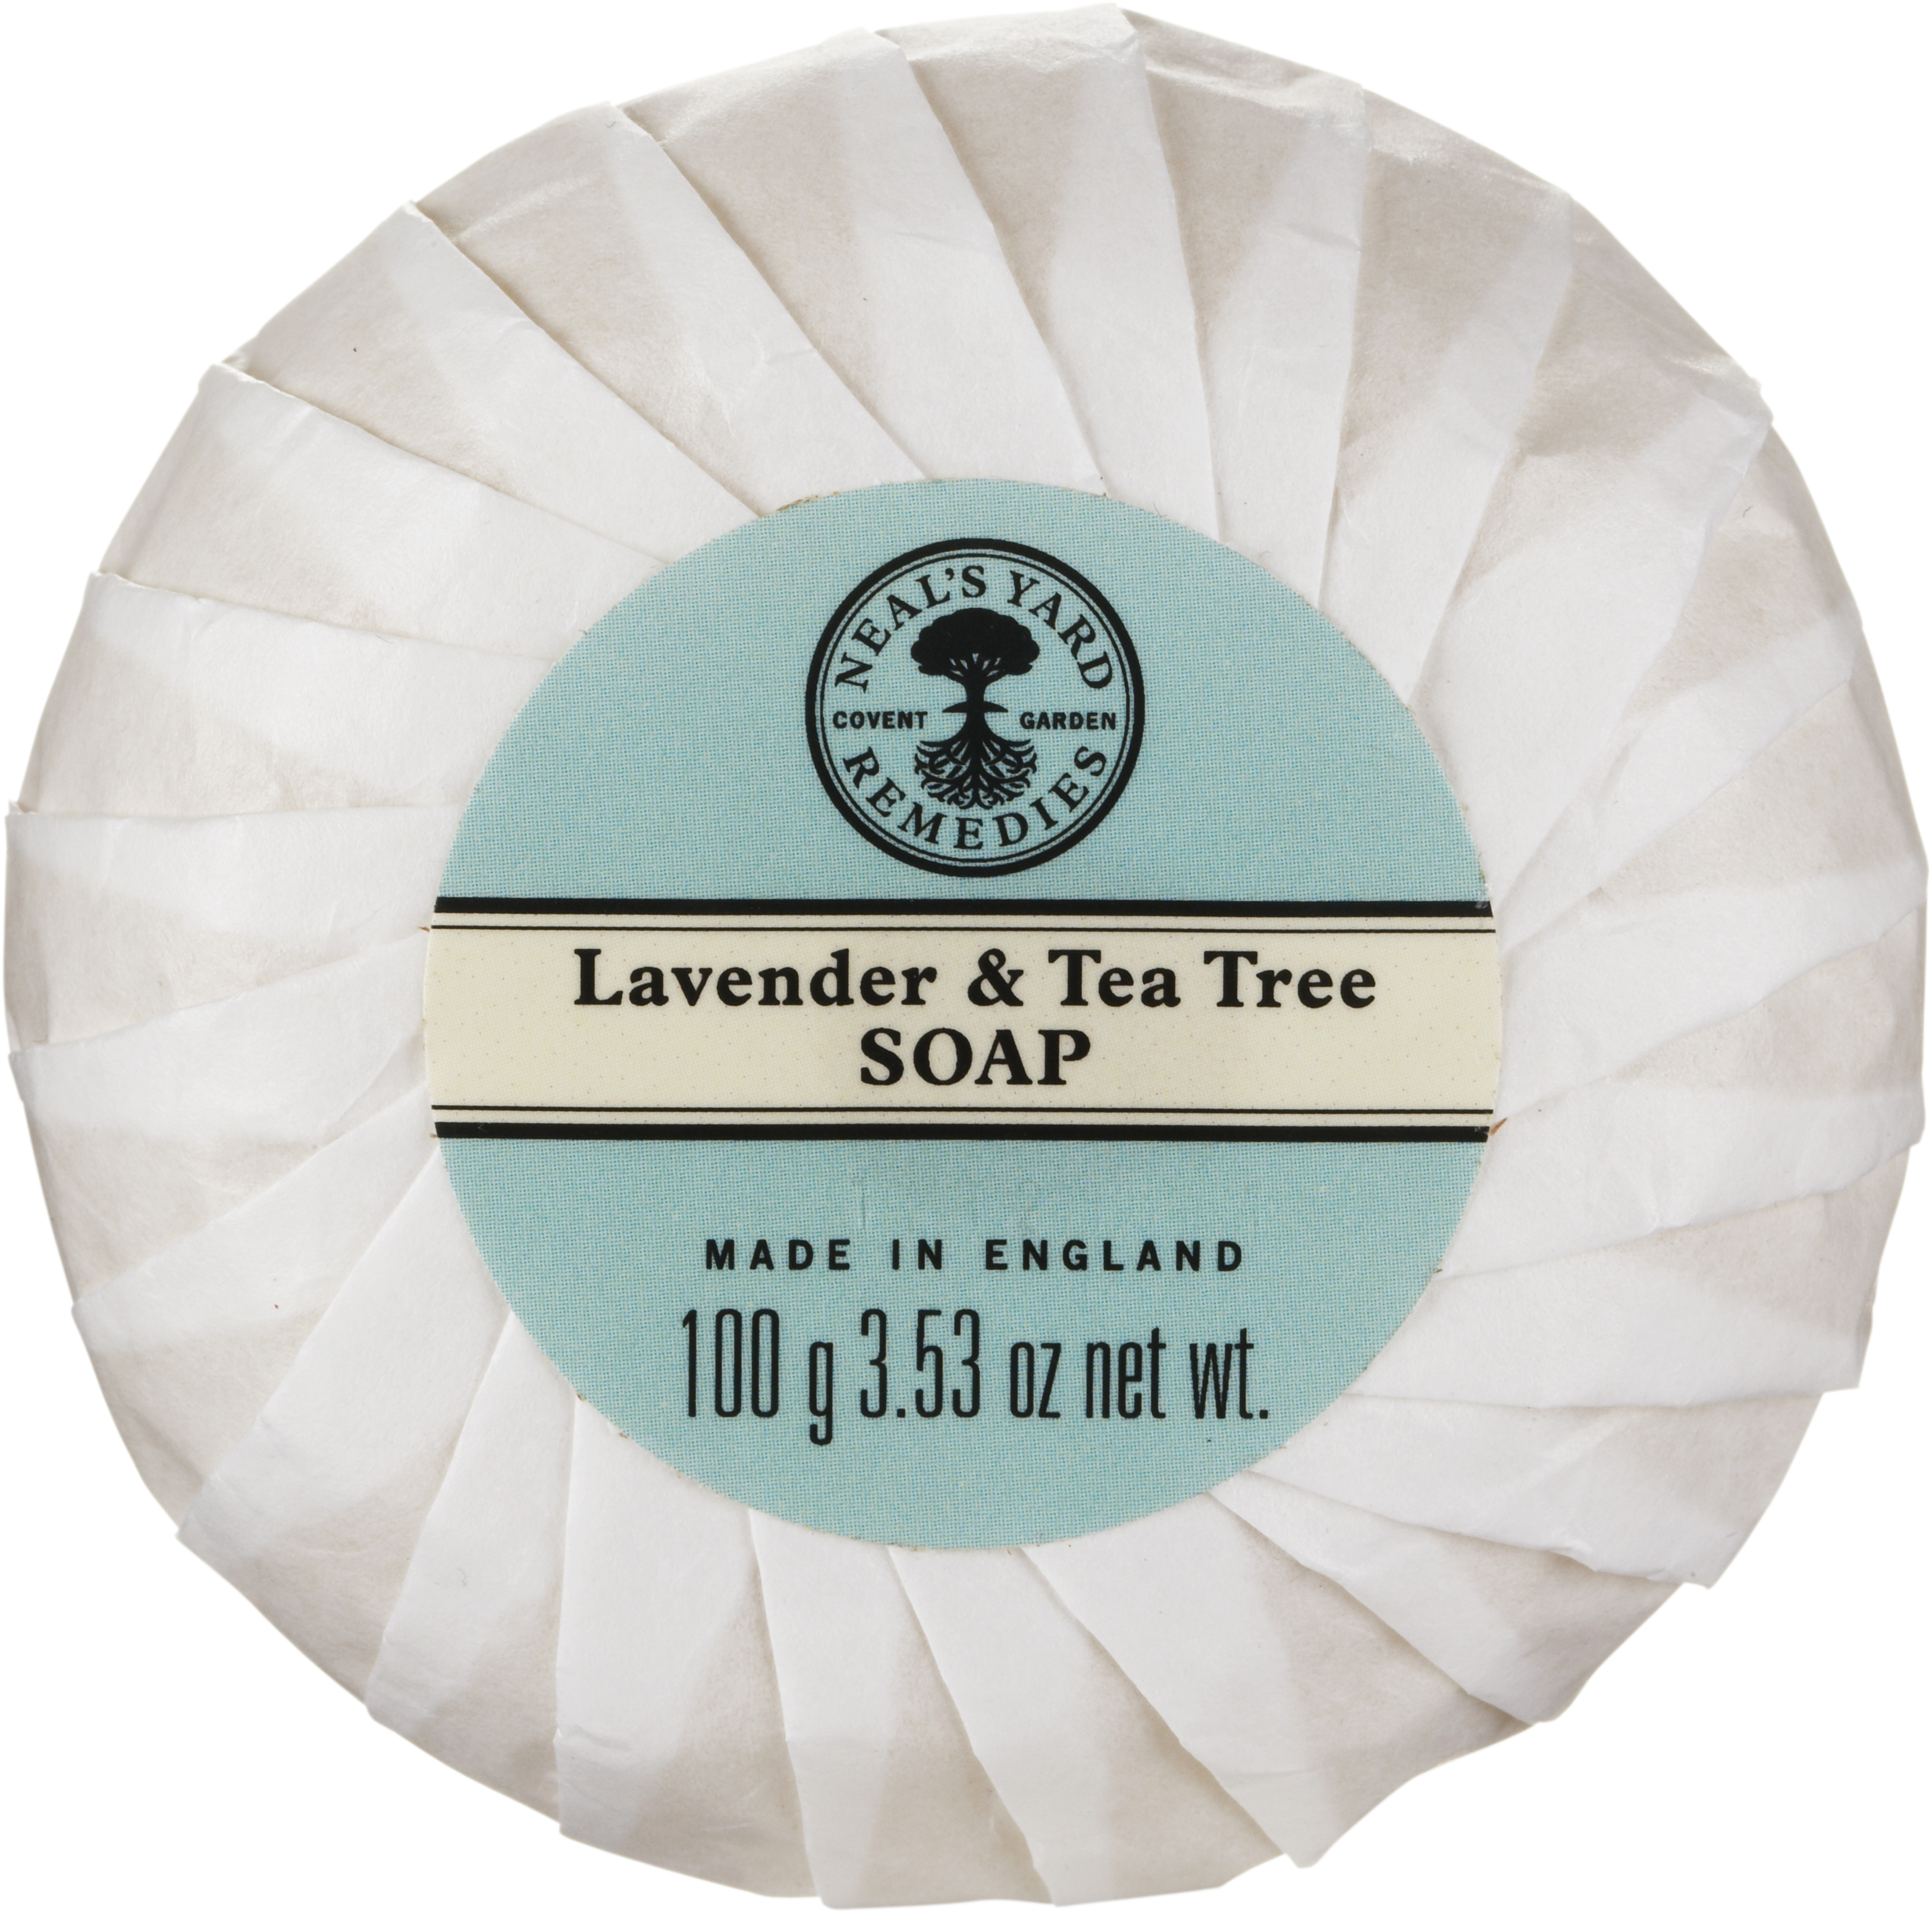 Neal’s Yard Remedies Lavender & Tea Tree Soap 100g